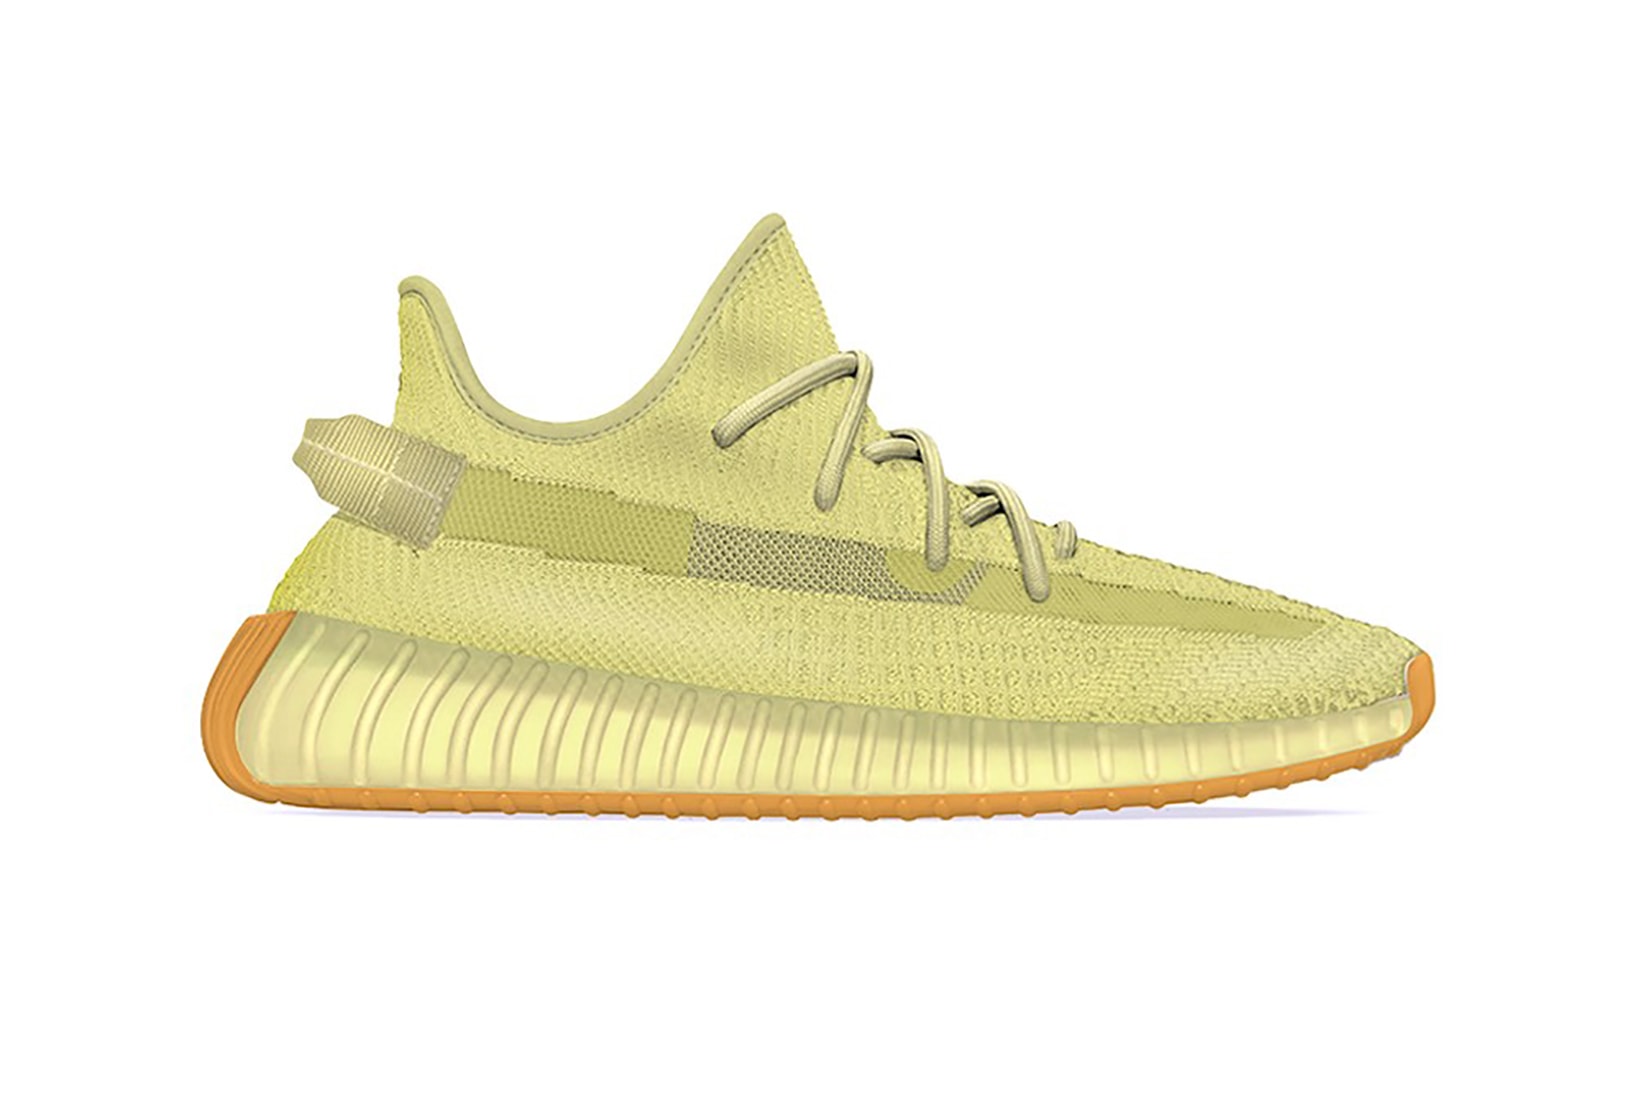 adidas kanye west yeezy boost 350 v2 flax sulphur neon green footwear sneakerhead